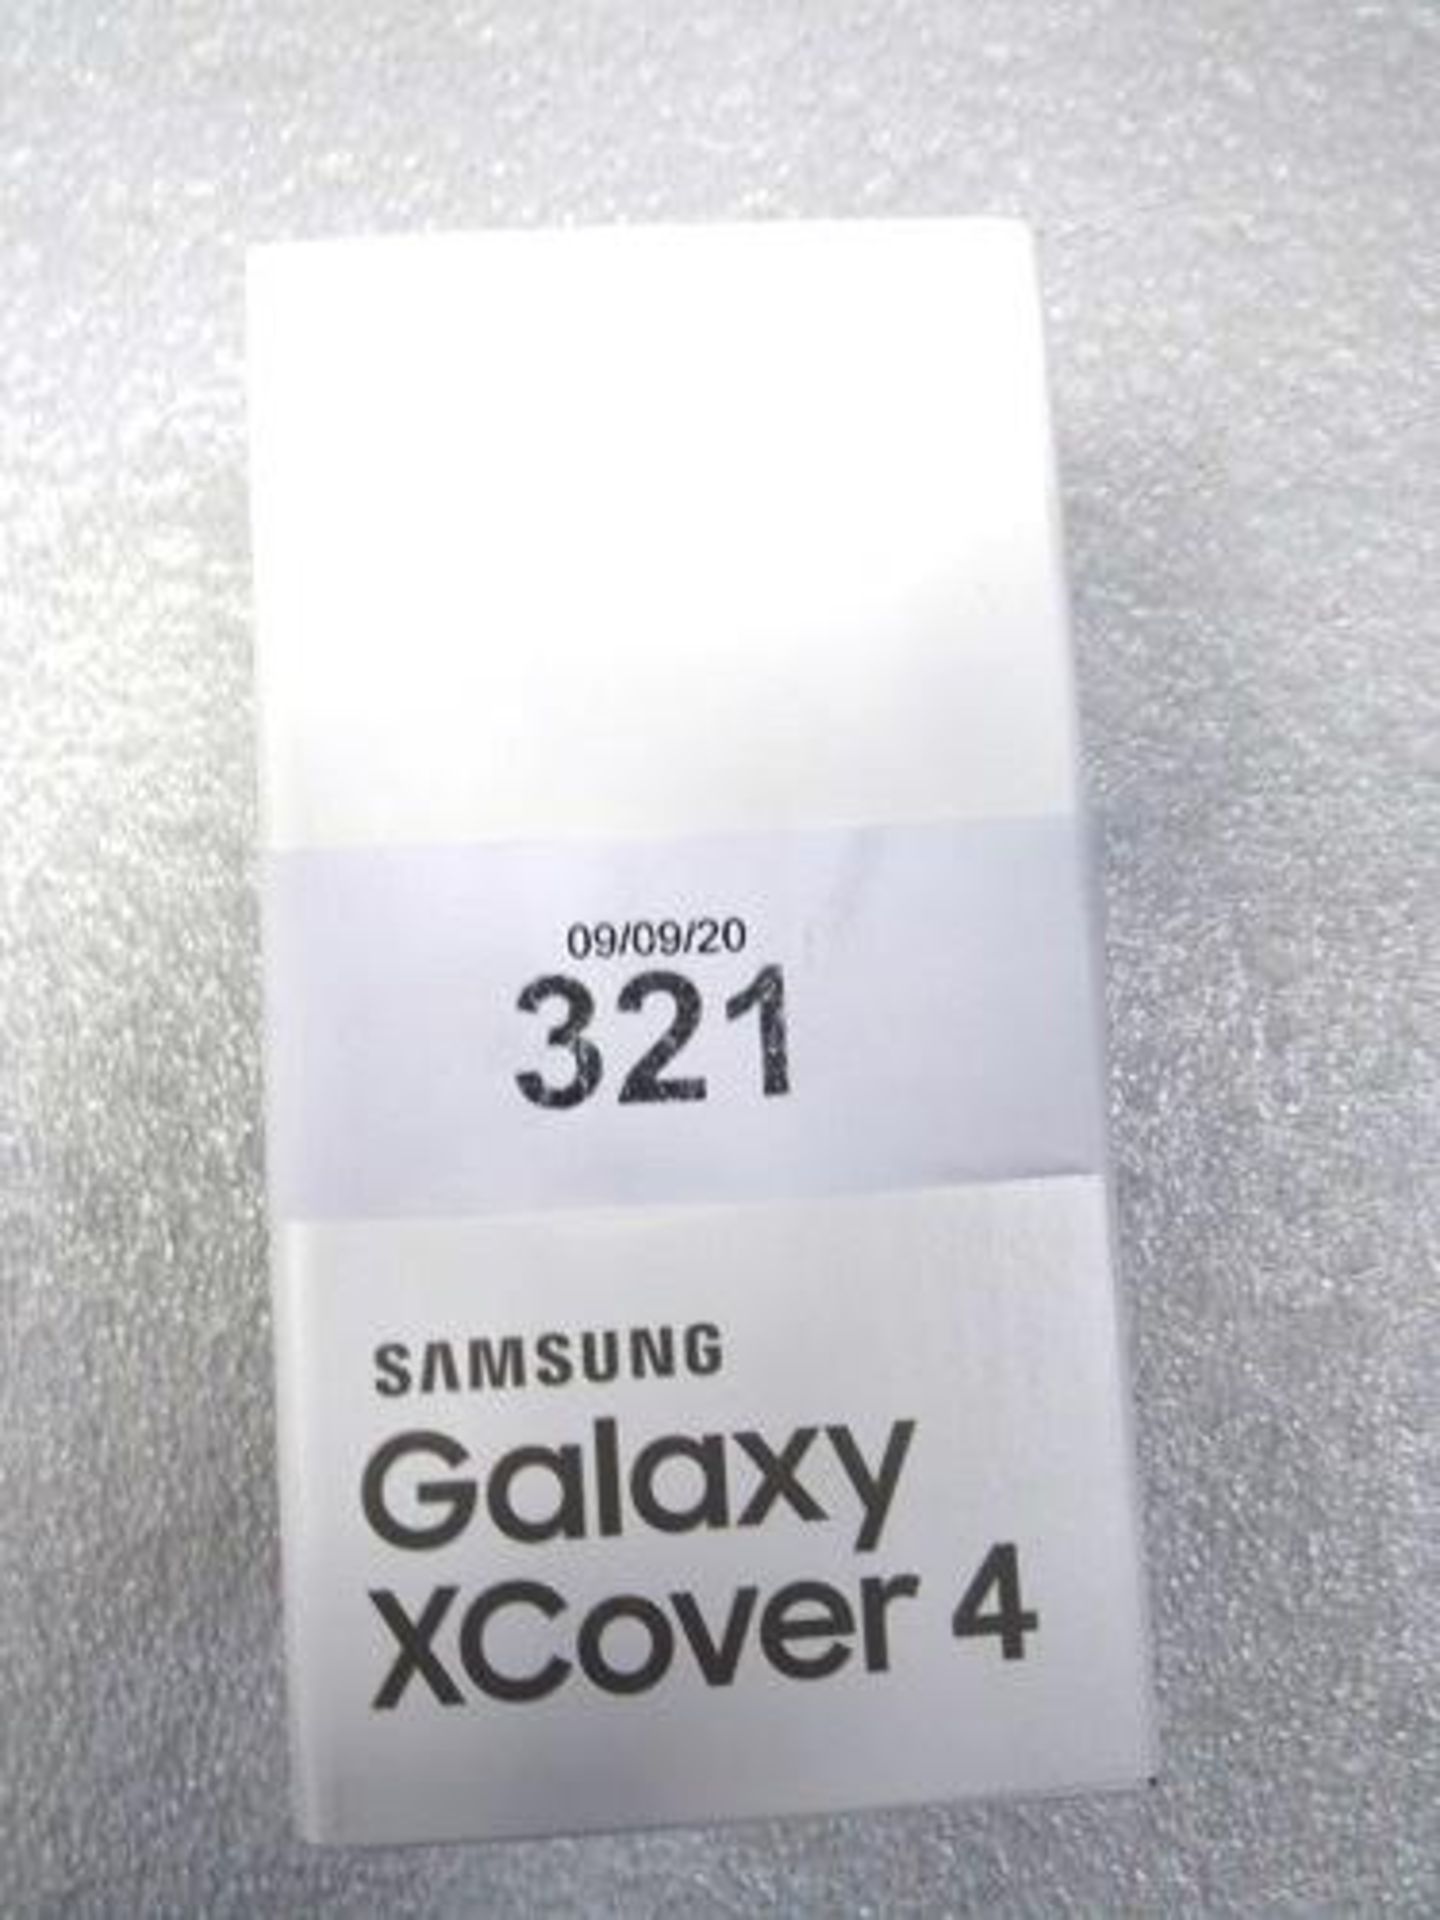 A black Samsung 16gb Galaxy XCover 4 smart phone, model SM-G390F, IMEI: 355215/10 559996/8 - New